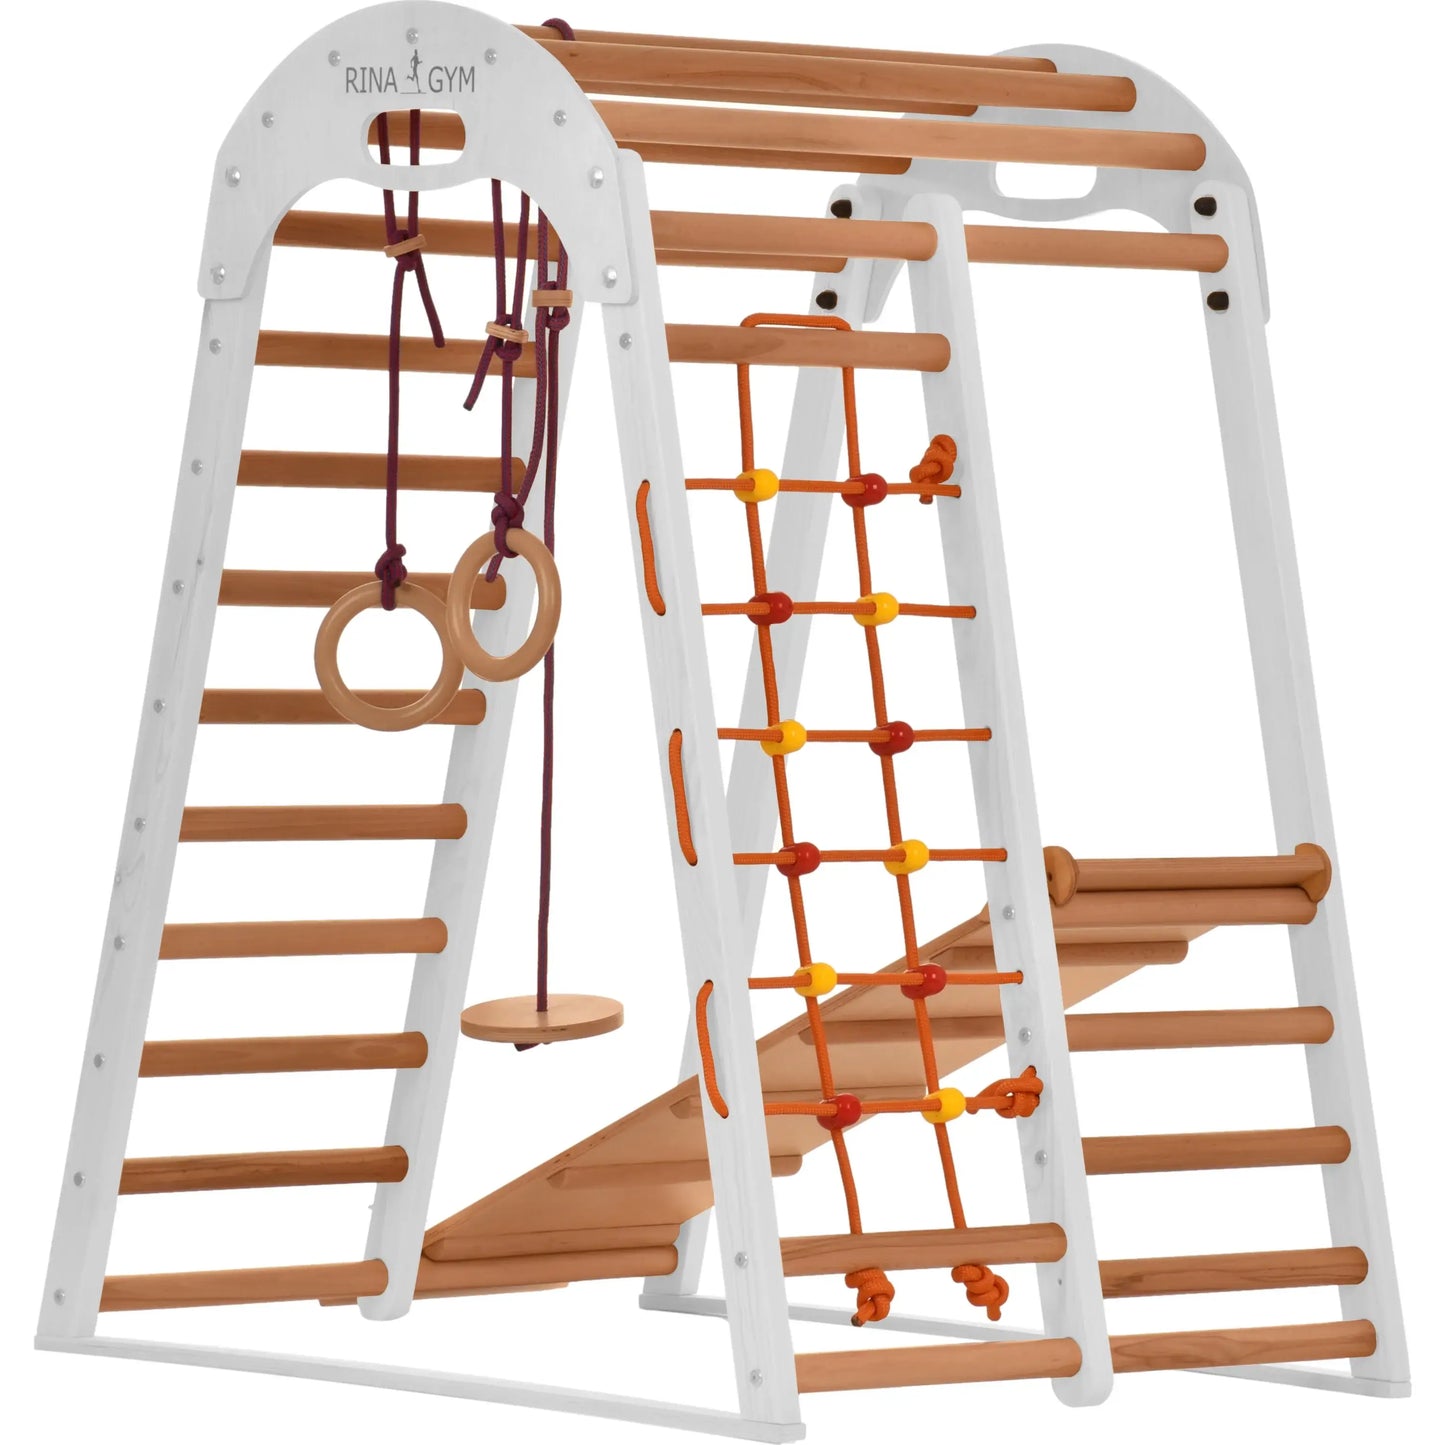 Binnenspeeltuin wit van hout - klimnet, zweedse ladder, ringen, glijbaan